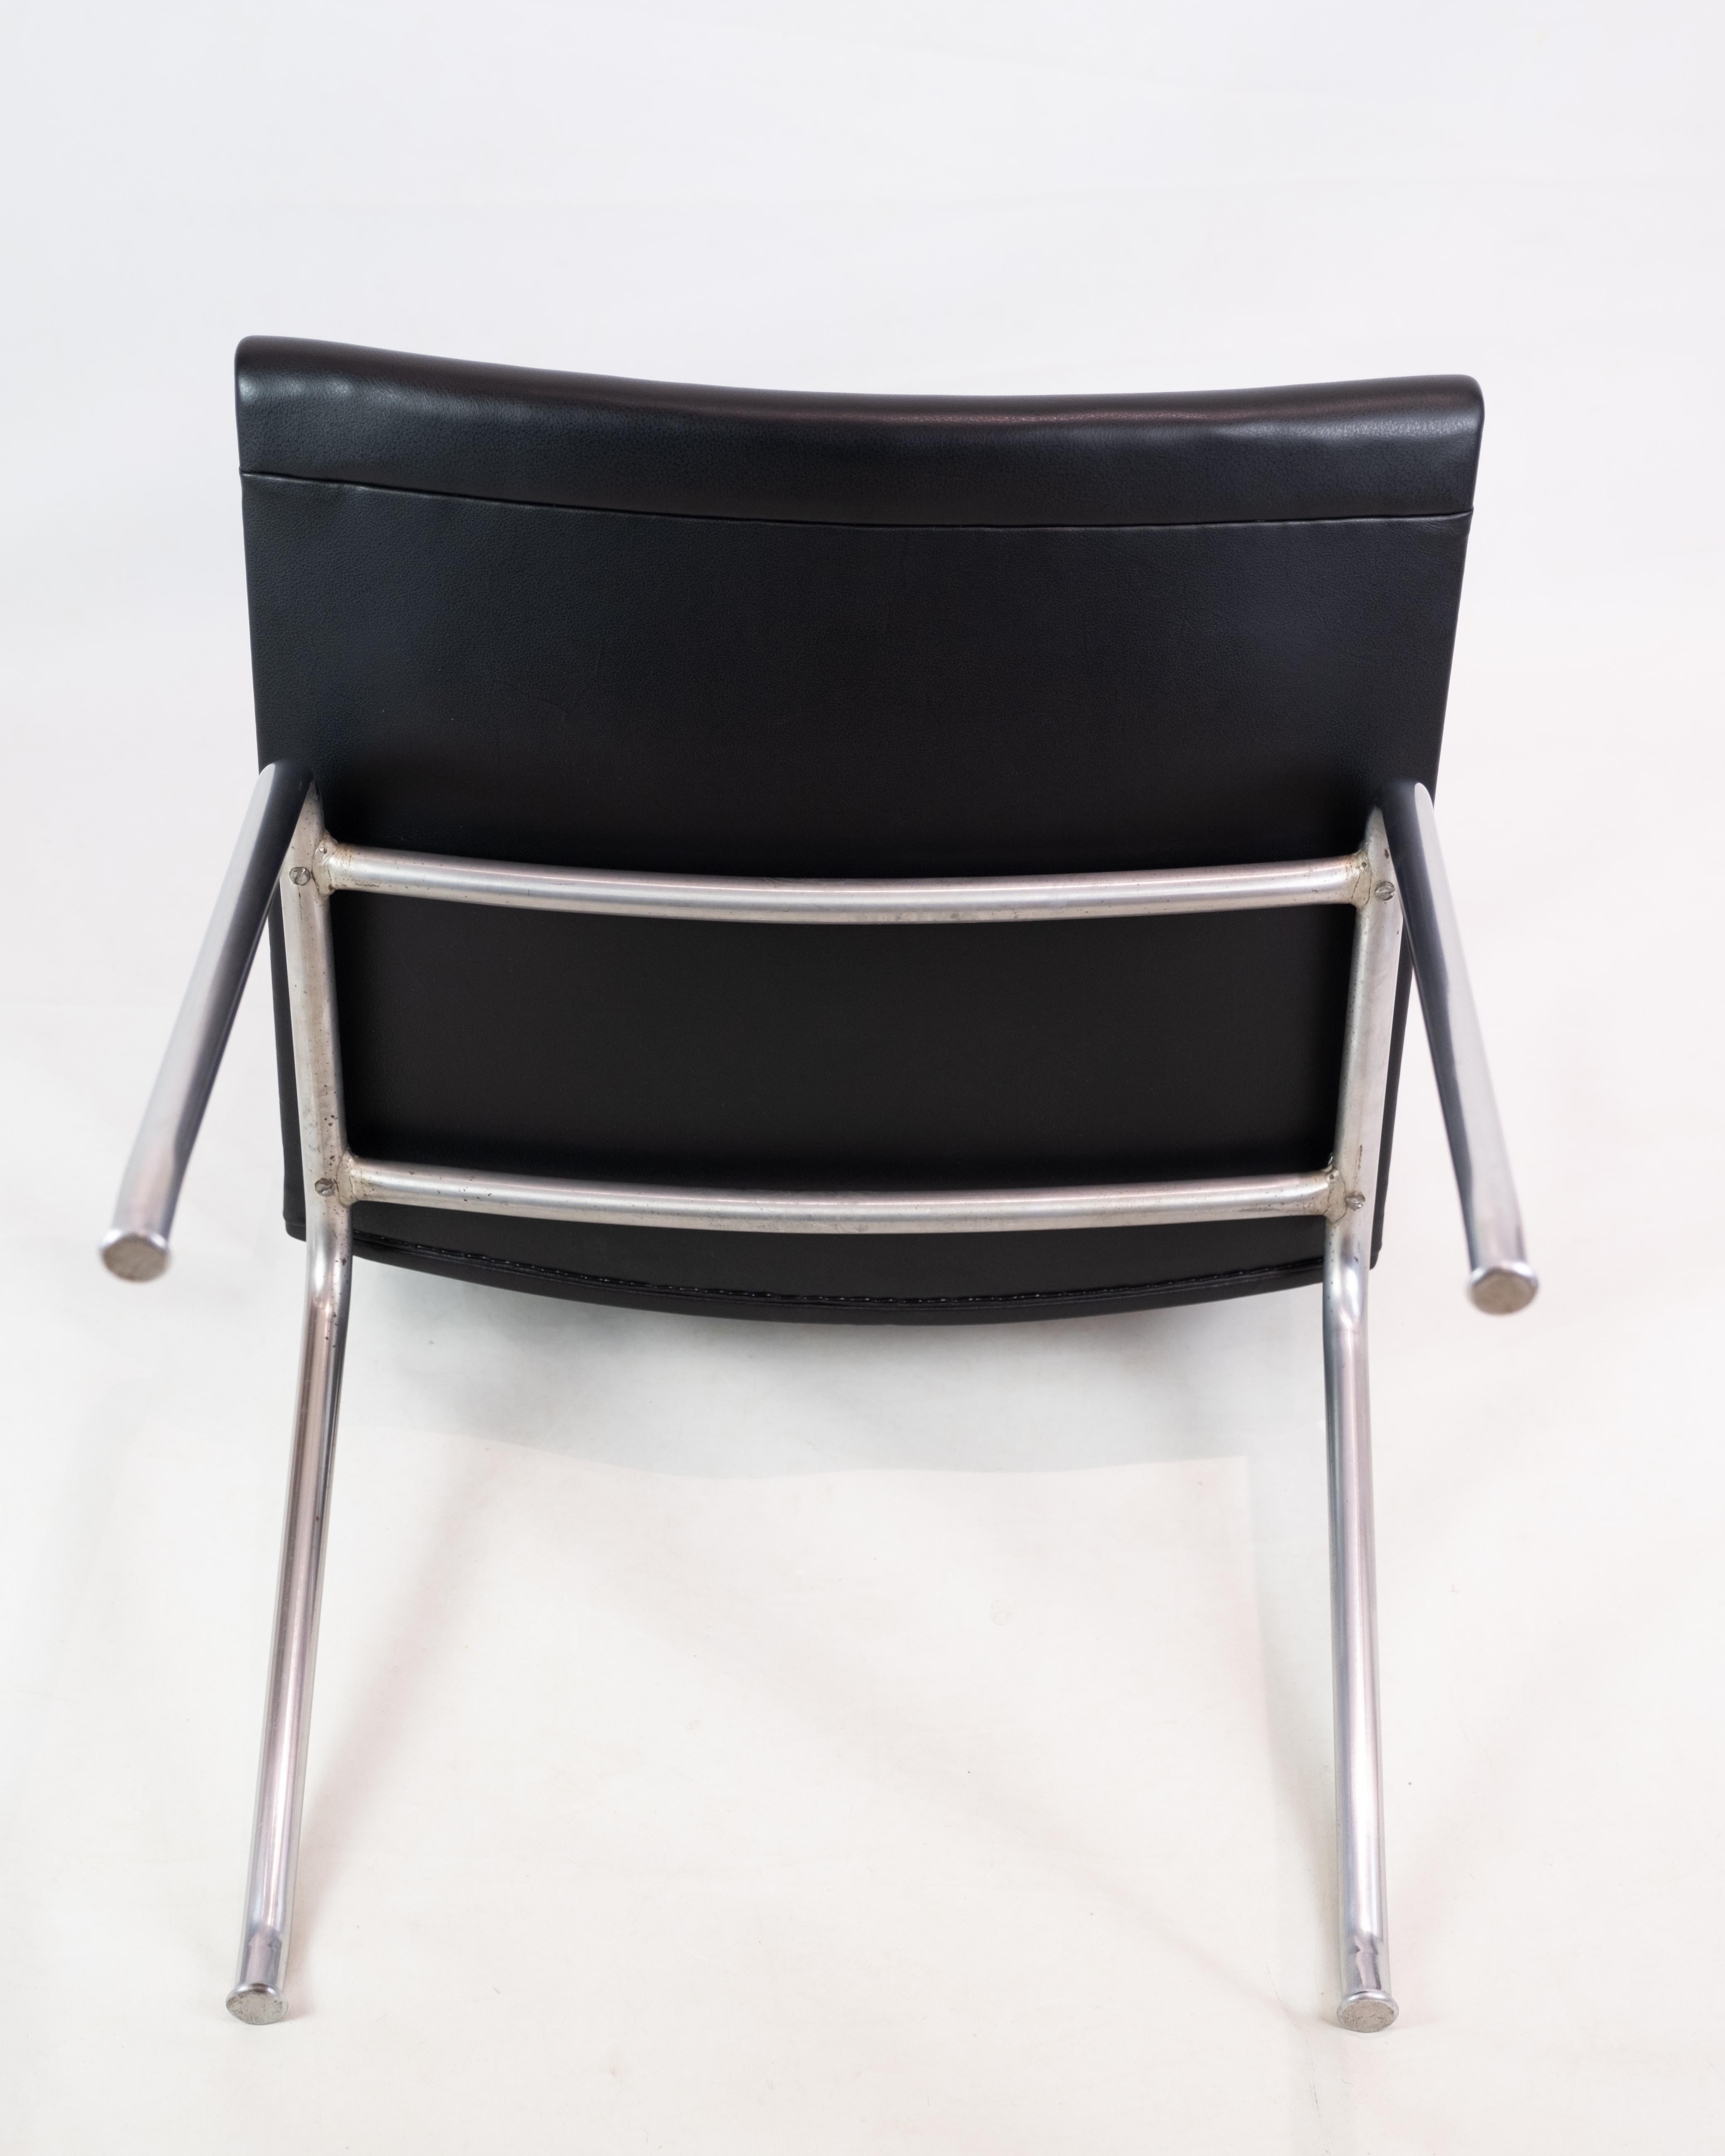 Kastrup Chair in Black Leather Model CH401 By Hans J. Wegner & Carl Hansen & Søn In Good Condition For Sale In Lejre, DK